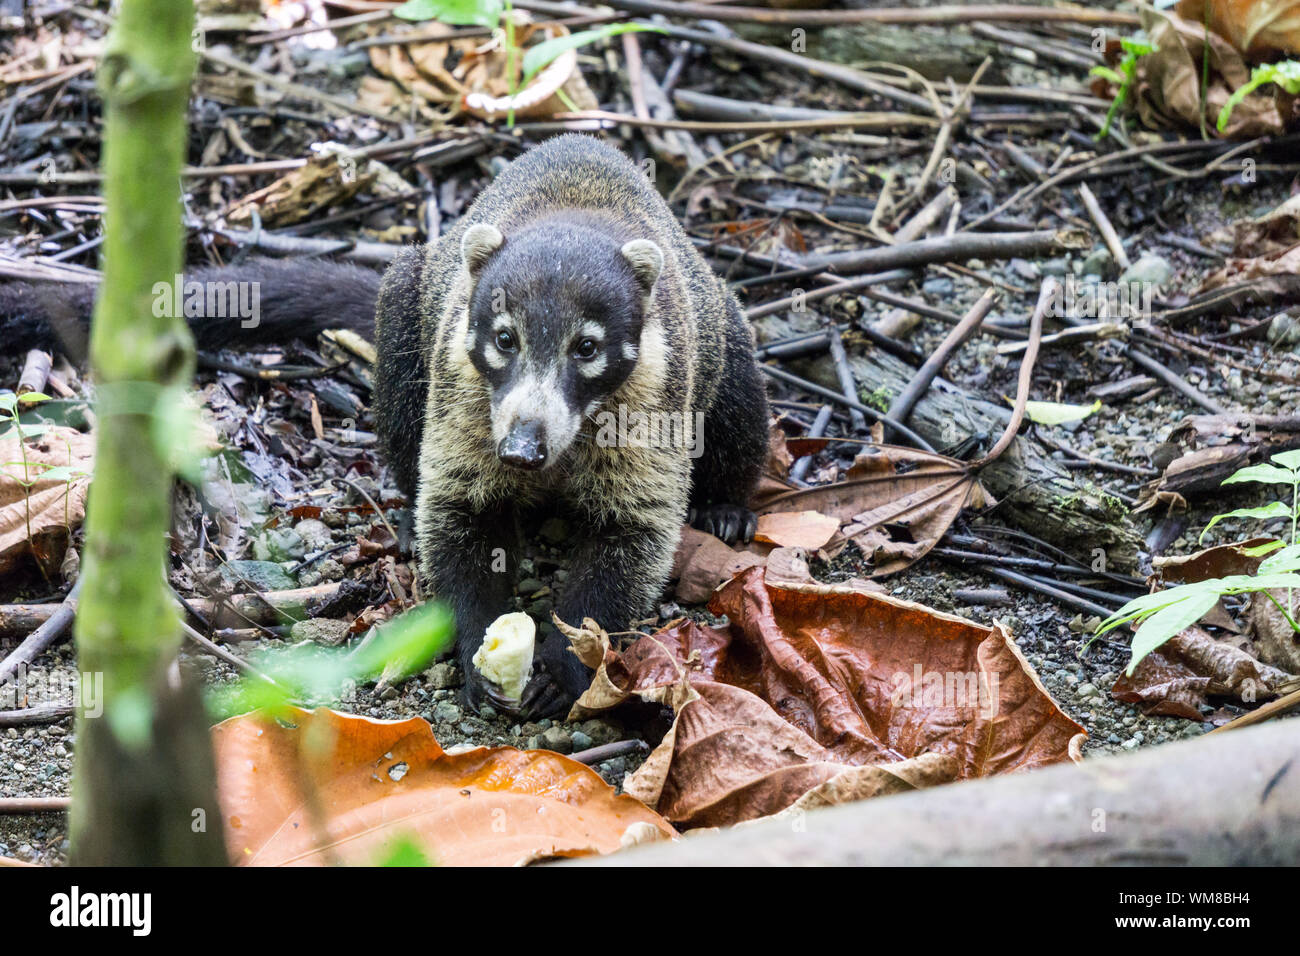 Coatimundi (Coati) in wild mangiare frutta banana, Parco Nazionale di Corcovado, Costa Rica Foto Stock